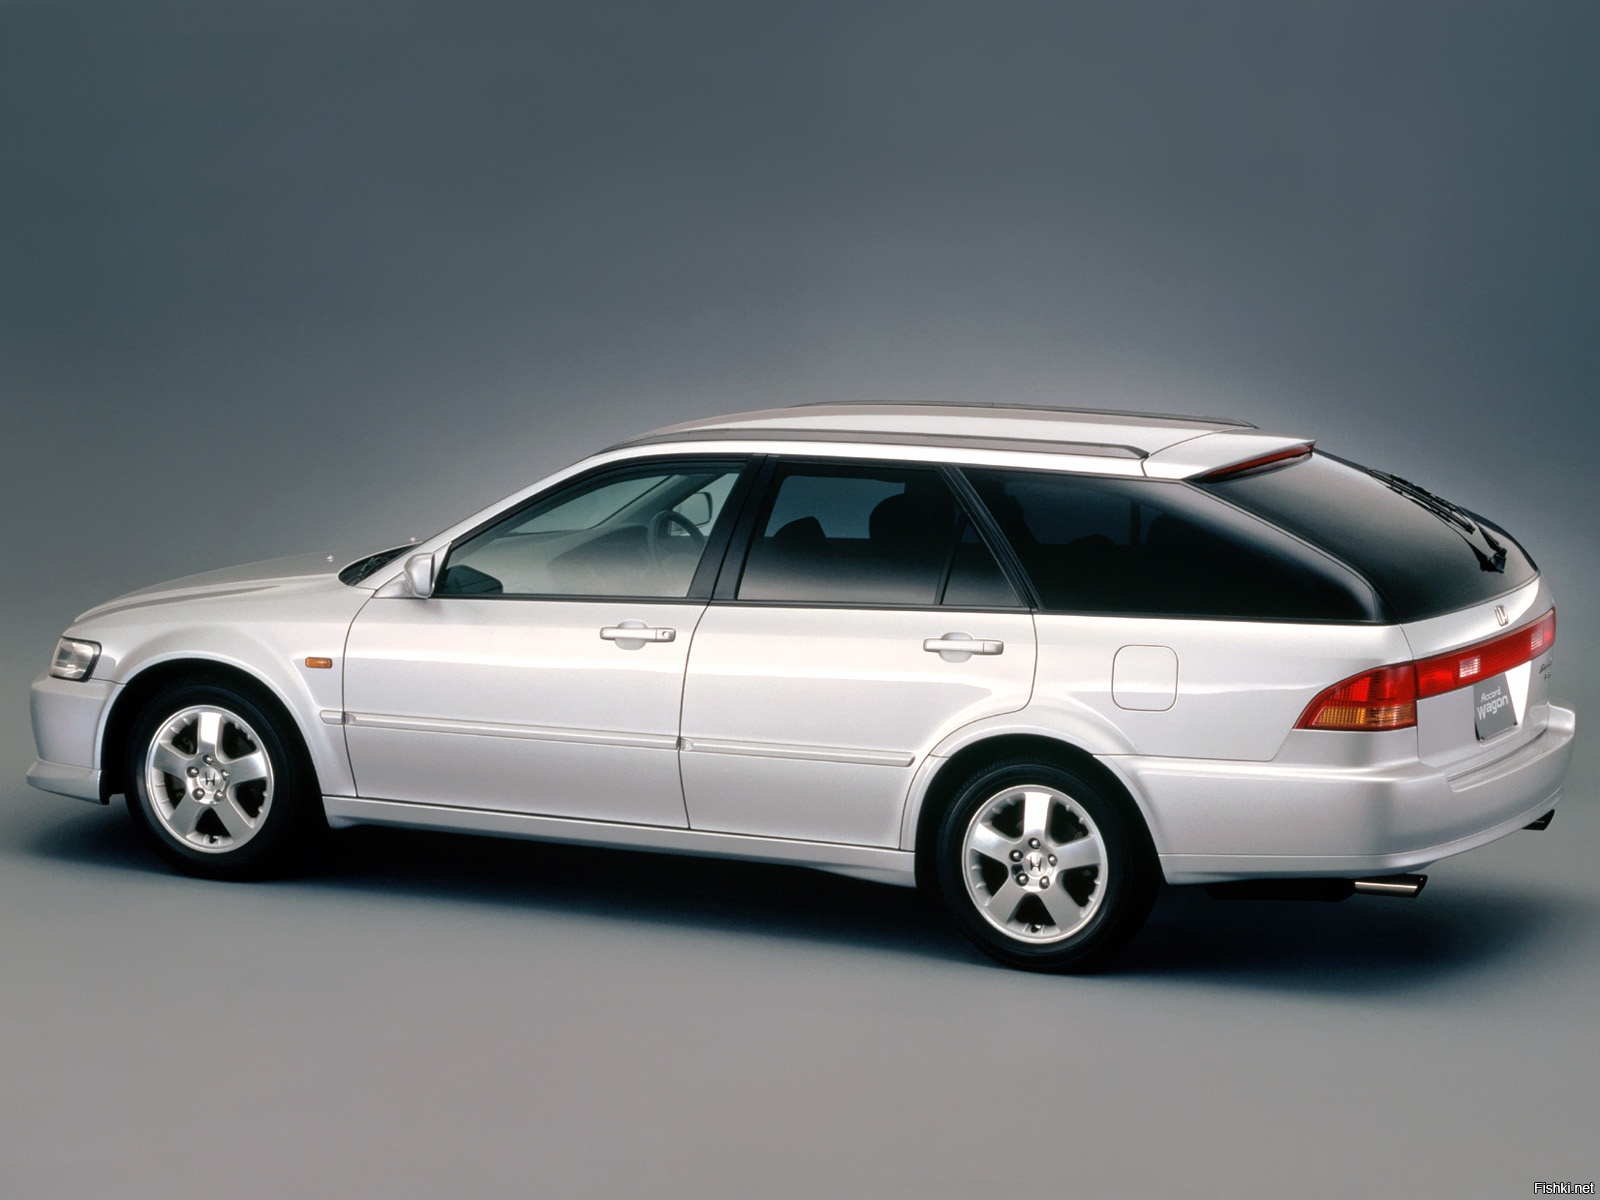 Кузов универсал 5. Honda Accord 2002 универсал. Honda Accord vi 1998-2002. Honda Accord 6 Wagon. Honda Accord 5 универсал.